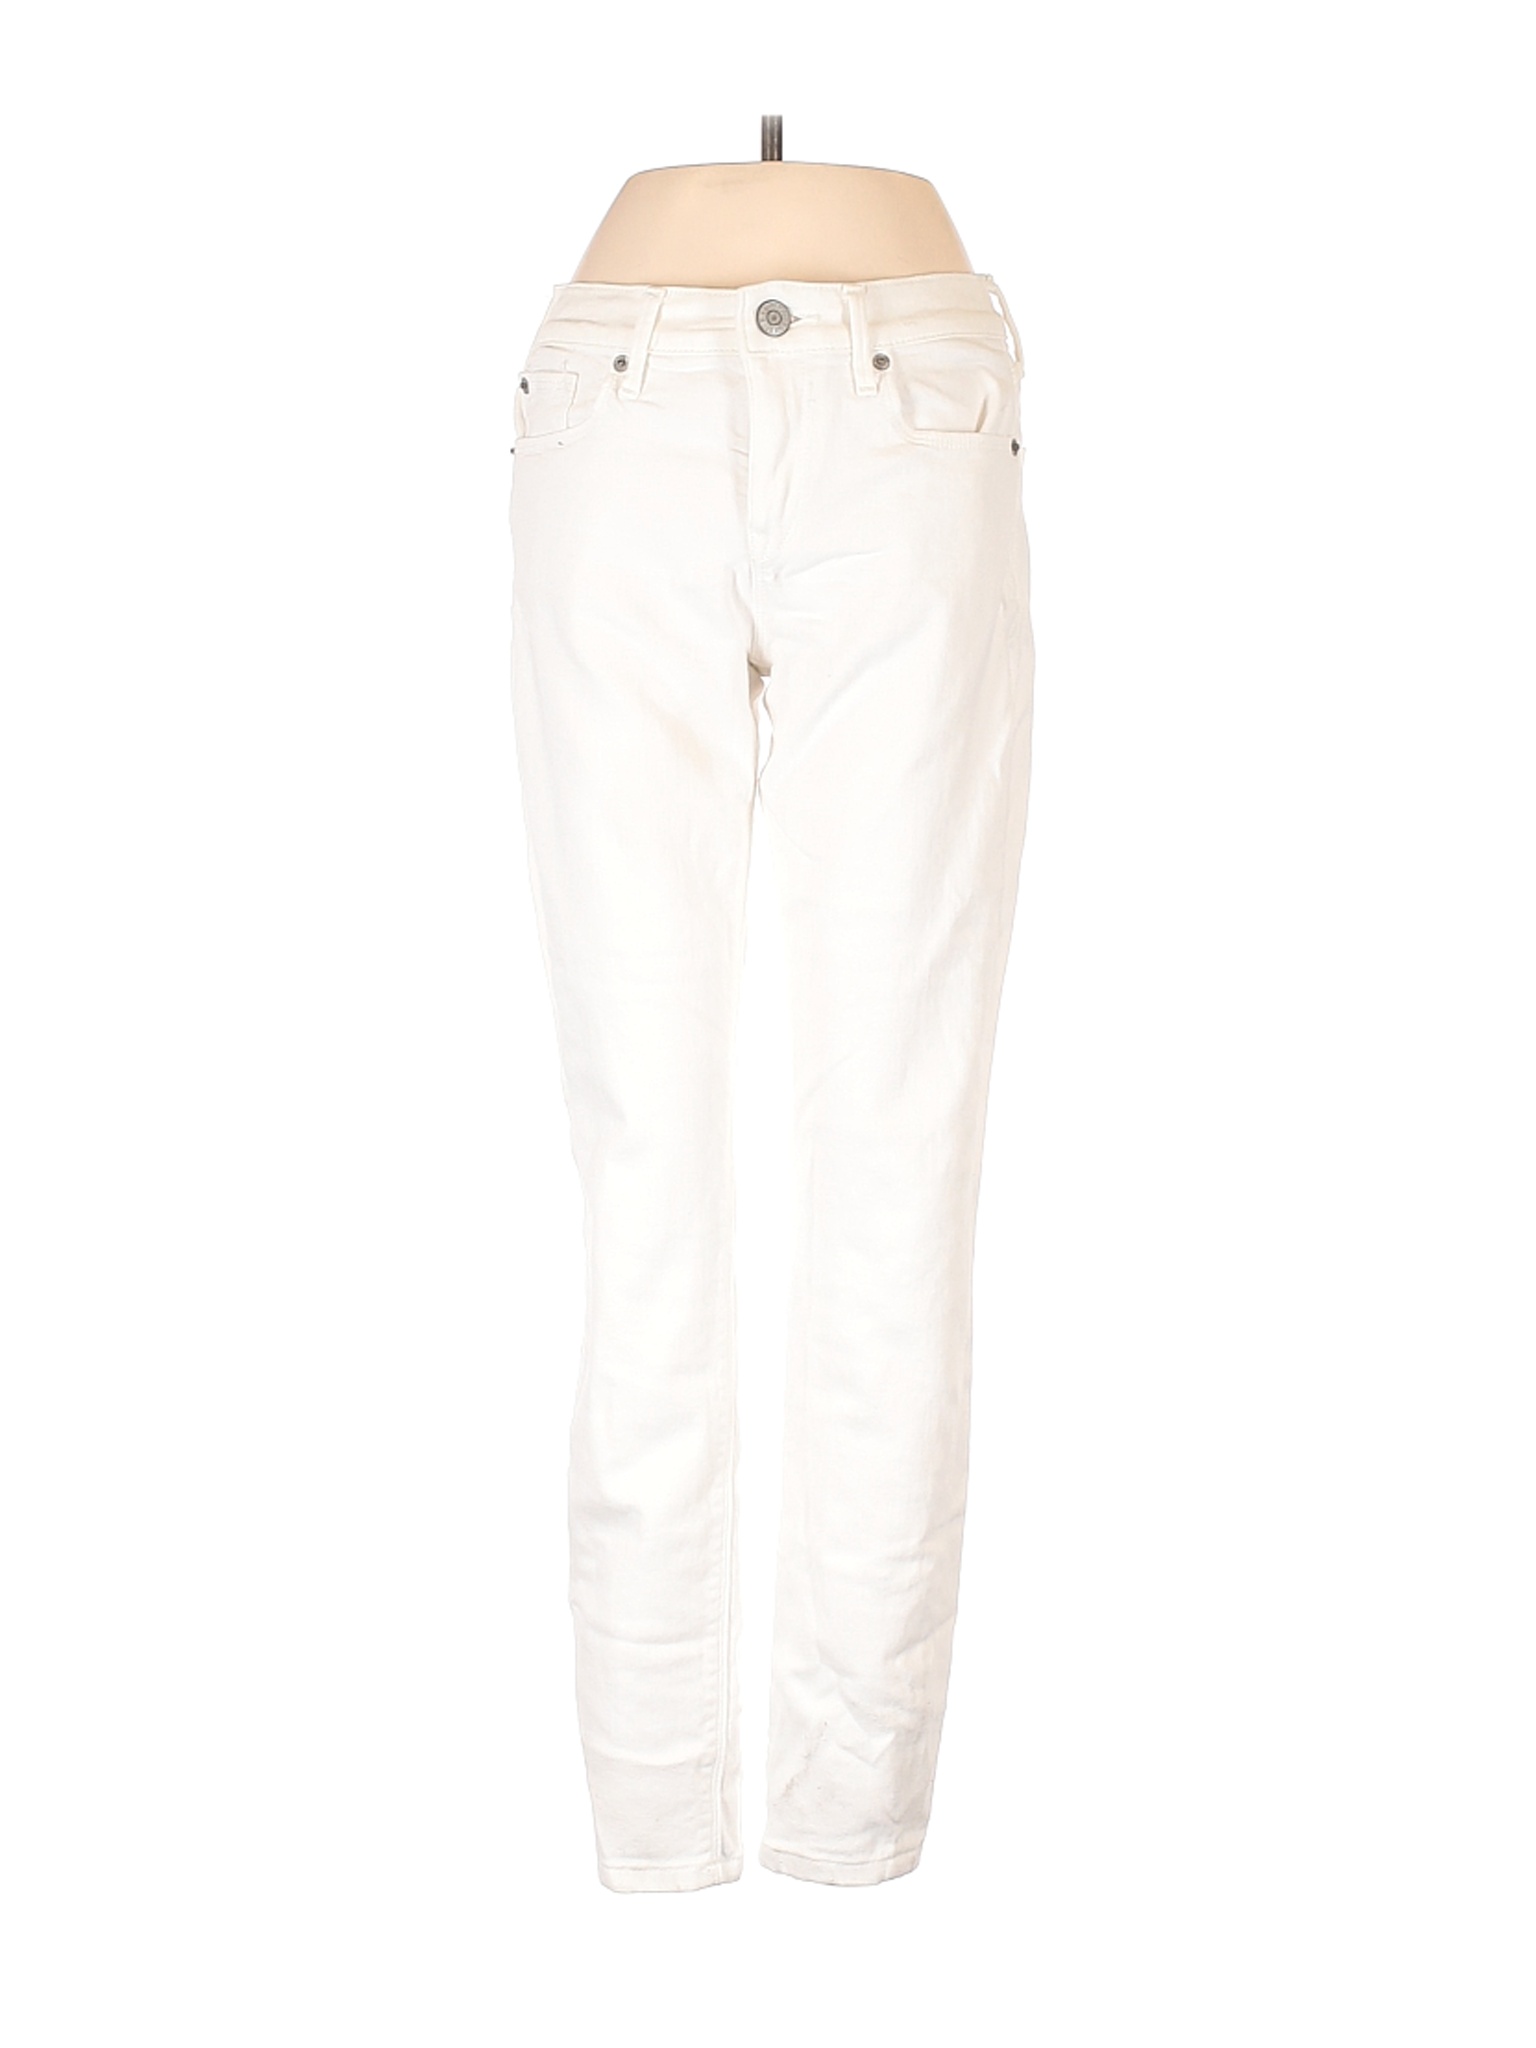 Express Jeans Women White Jeans 0 | eBay